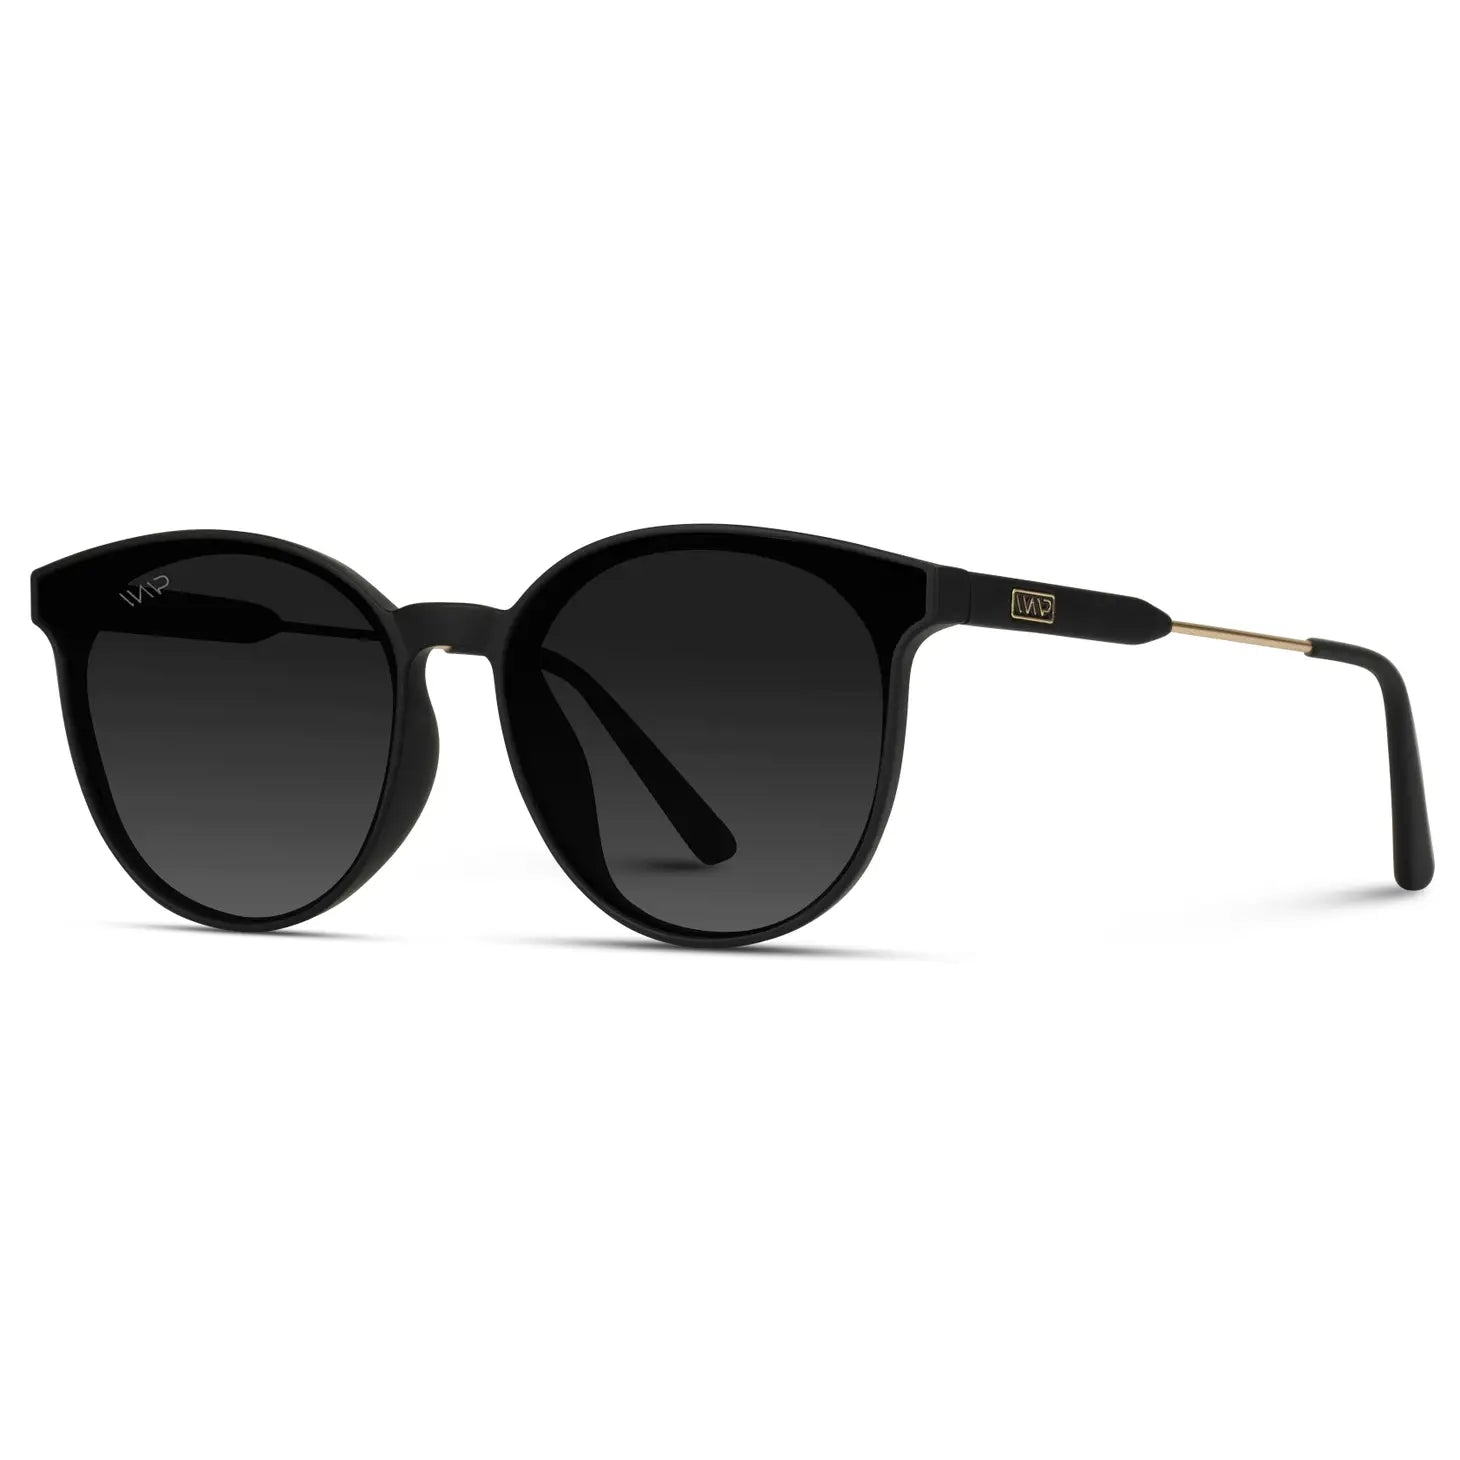 Aubrie Sunglasses in Black/Black